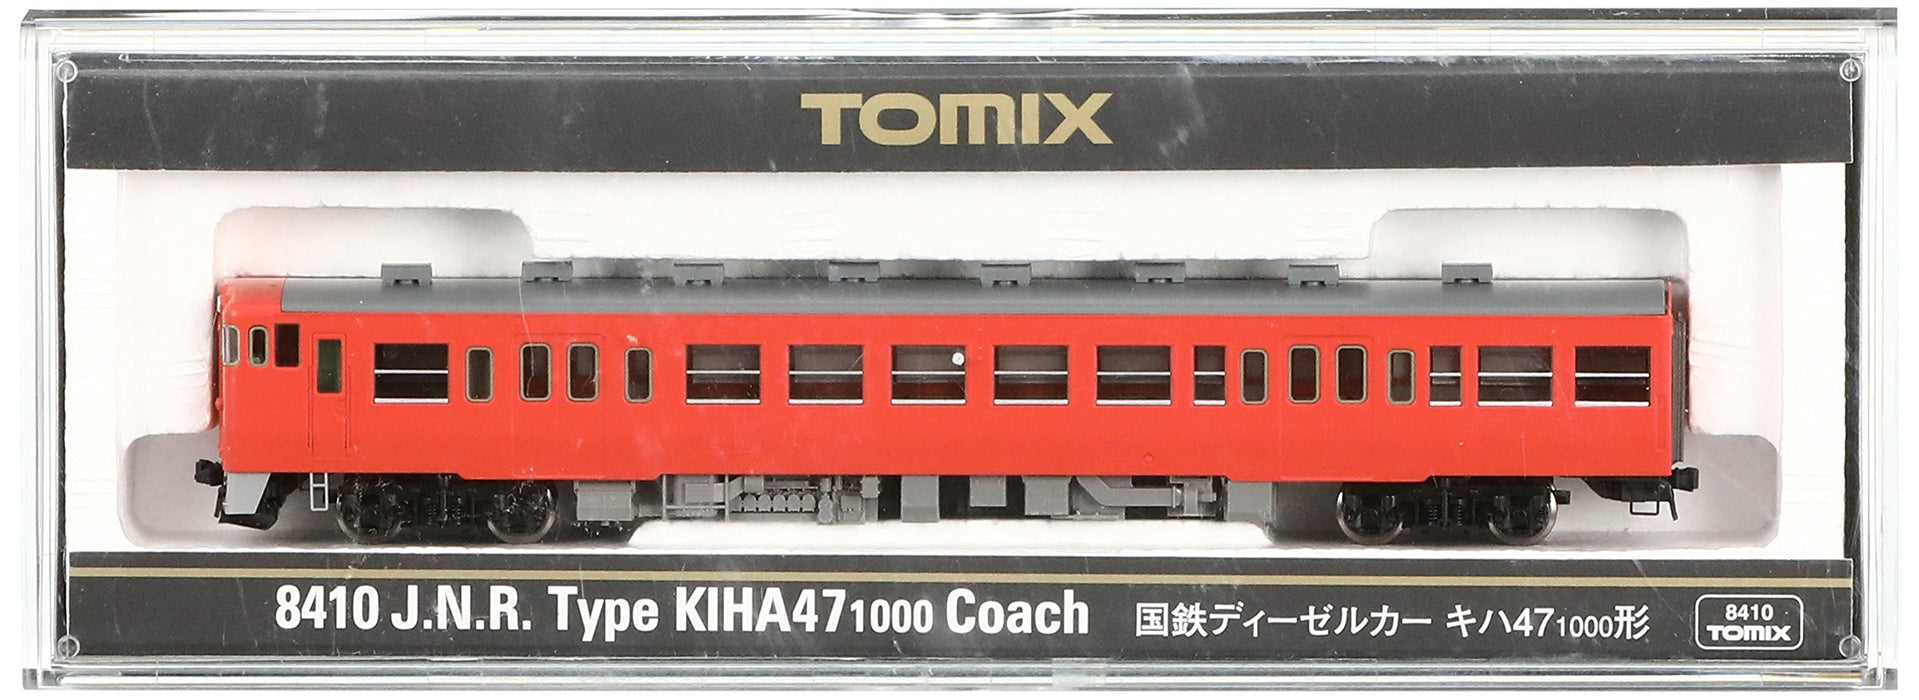 Tomytec Tomix N Gauge Kiha47 1000 Type 8410 Modèle de voiture ferroviaire diesel